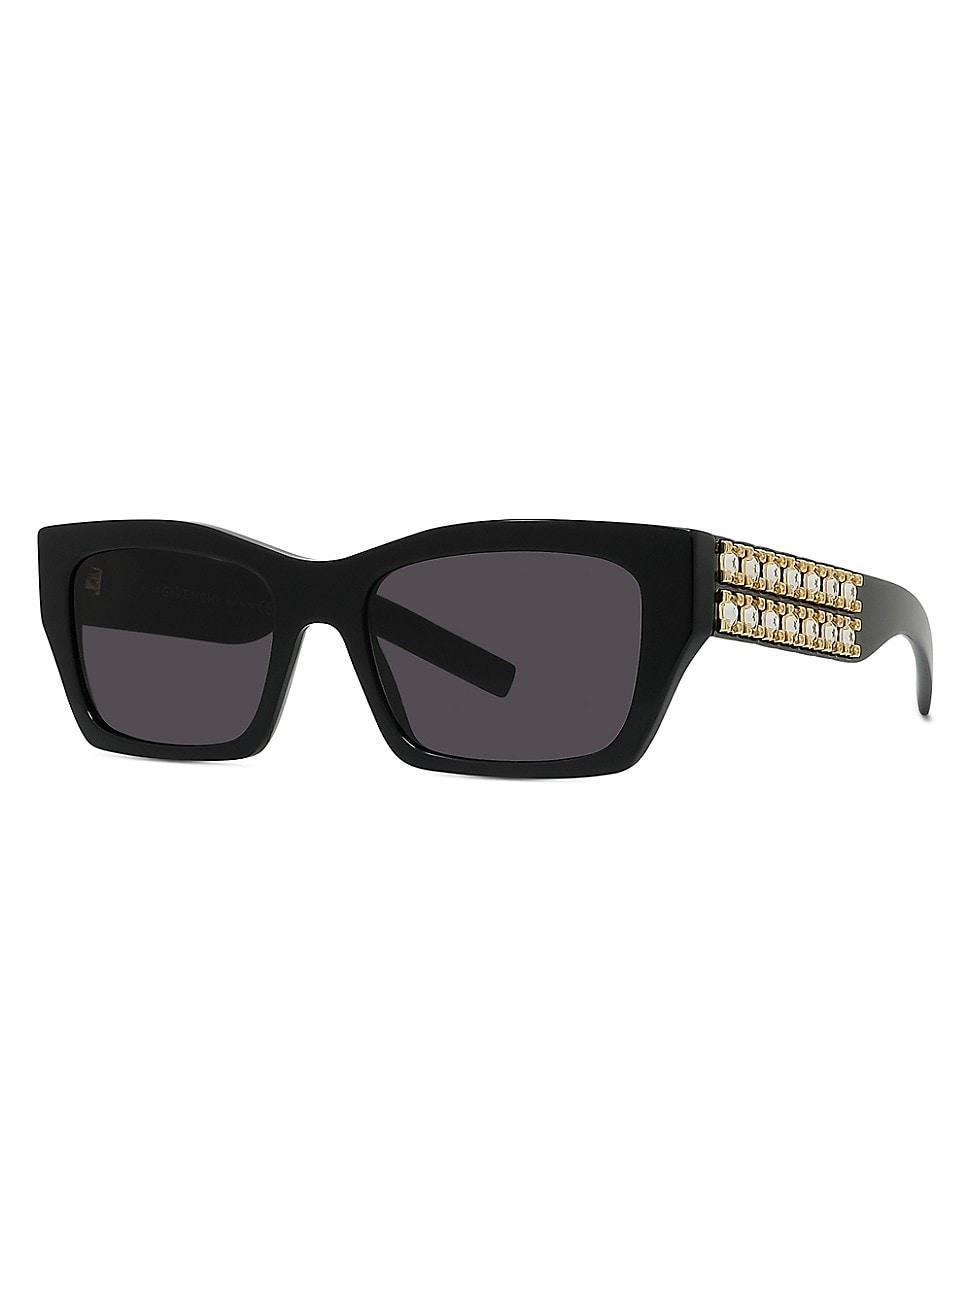 Womens D107 Rectangular Sunglasses Product Image